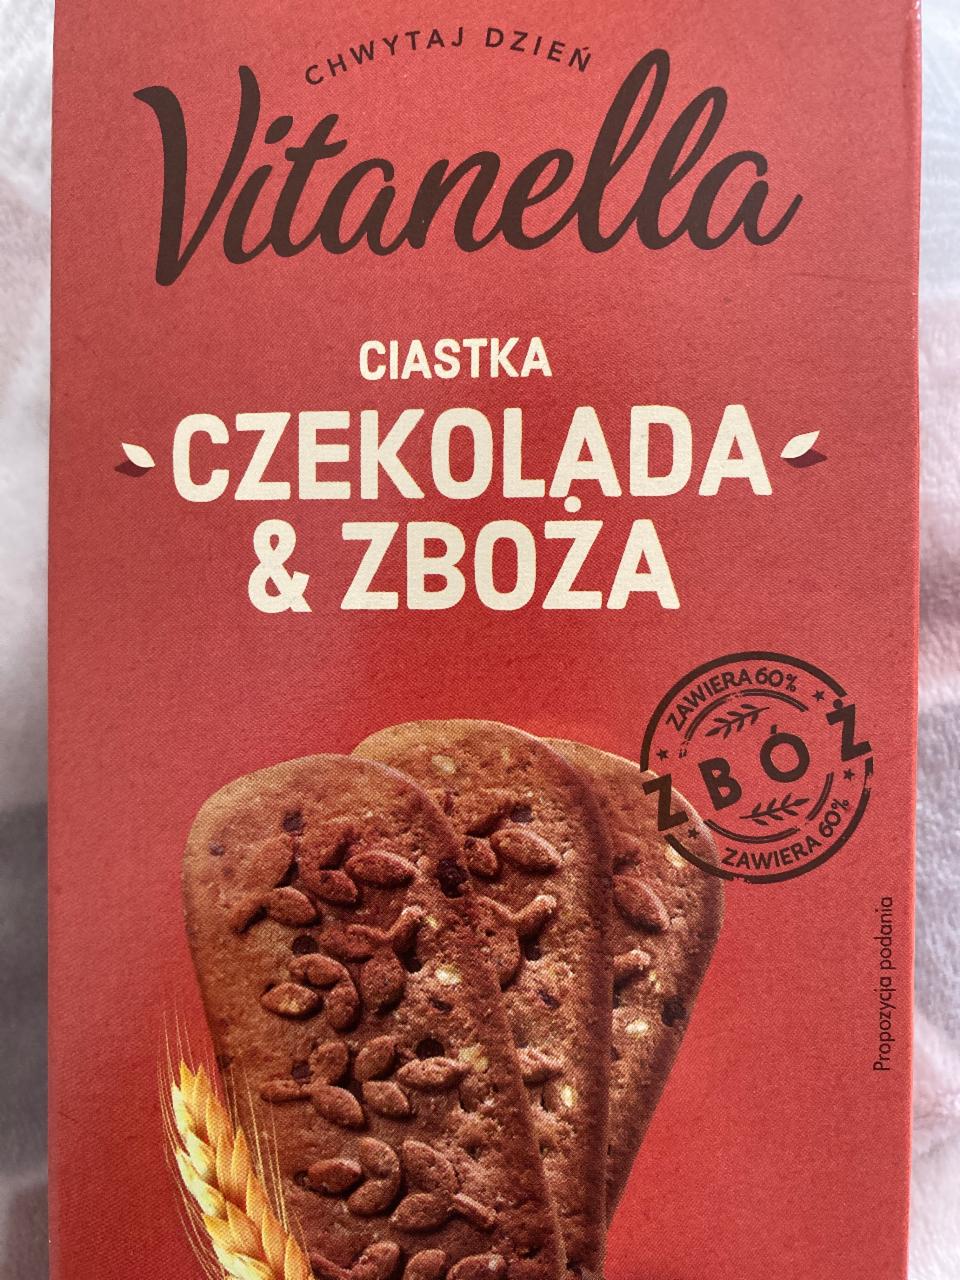 Фото - Печенье шоколадно-овсяное Czekolada&Zboza Vitanella